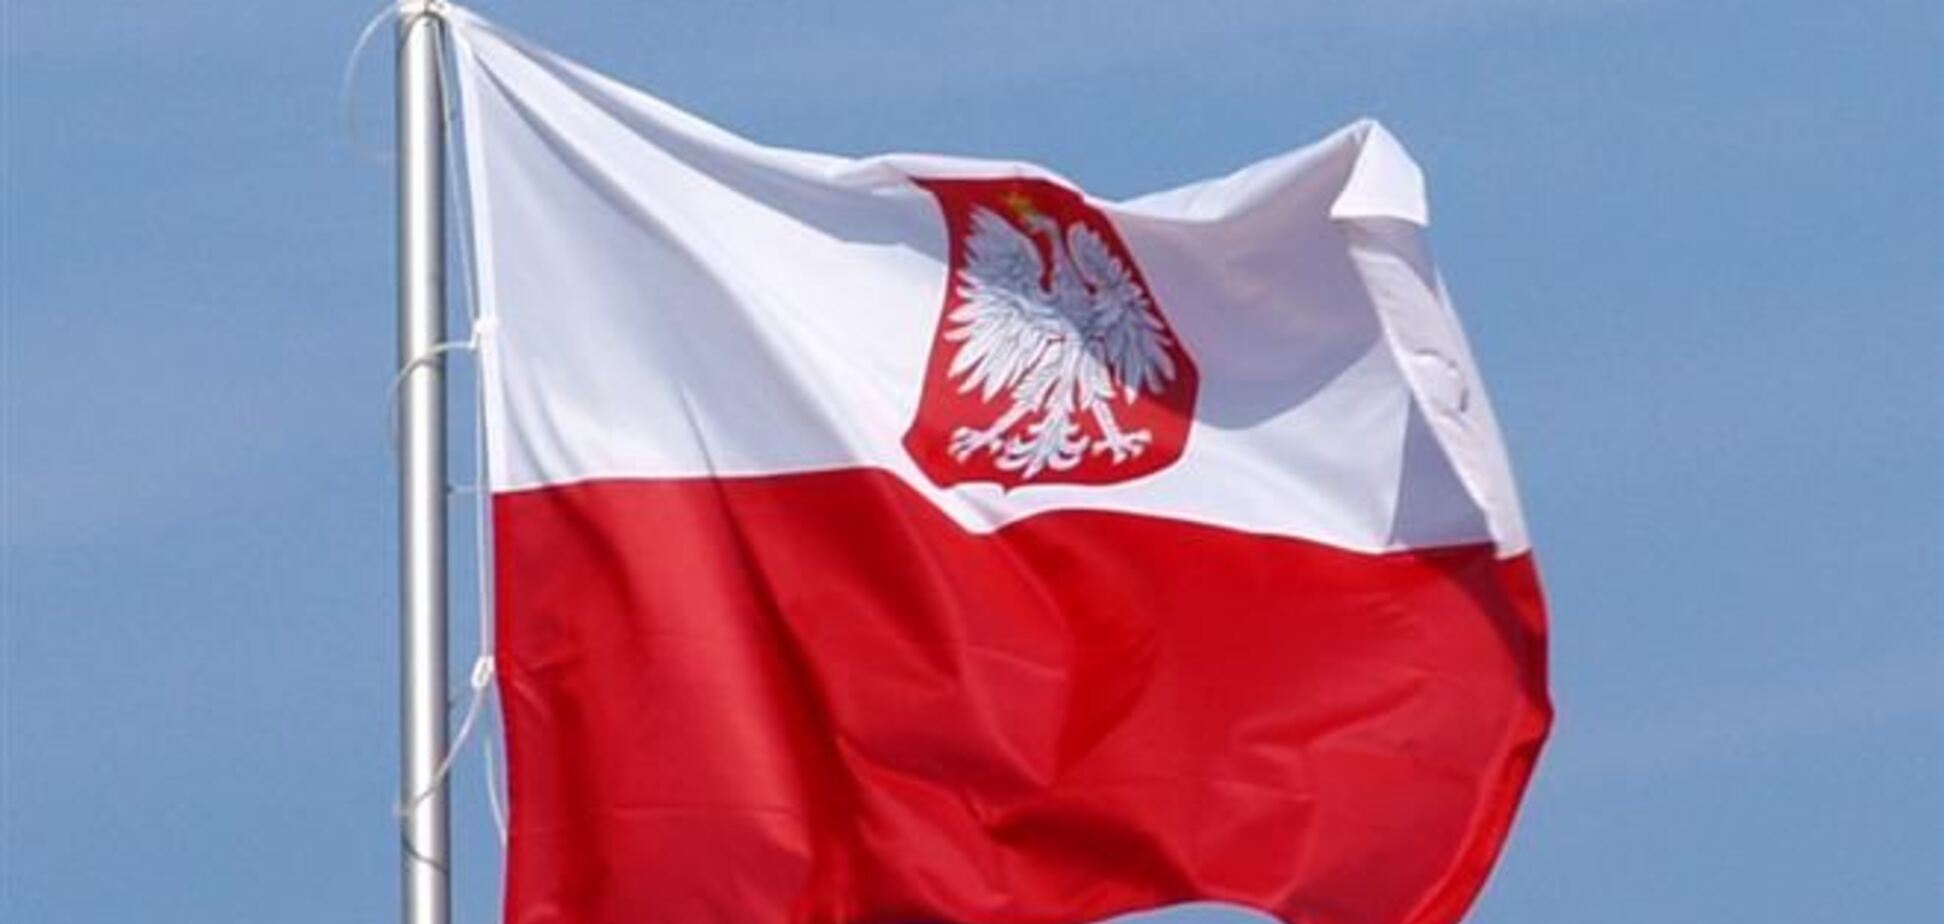 Українського посла викликали до МЗС Польщі